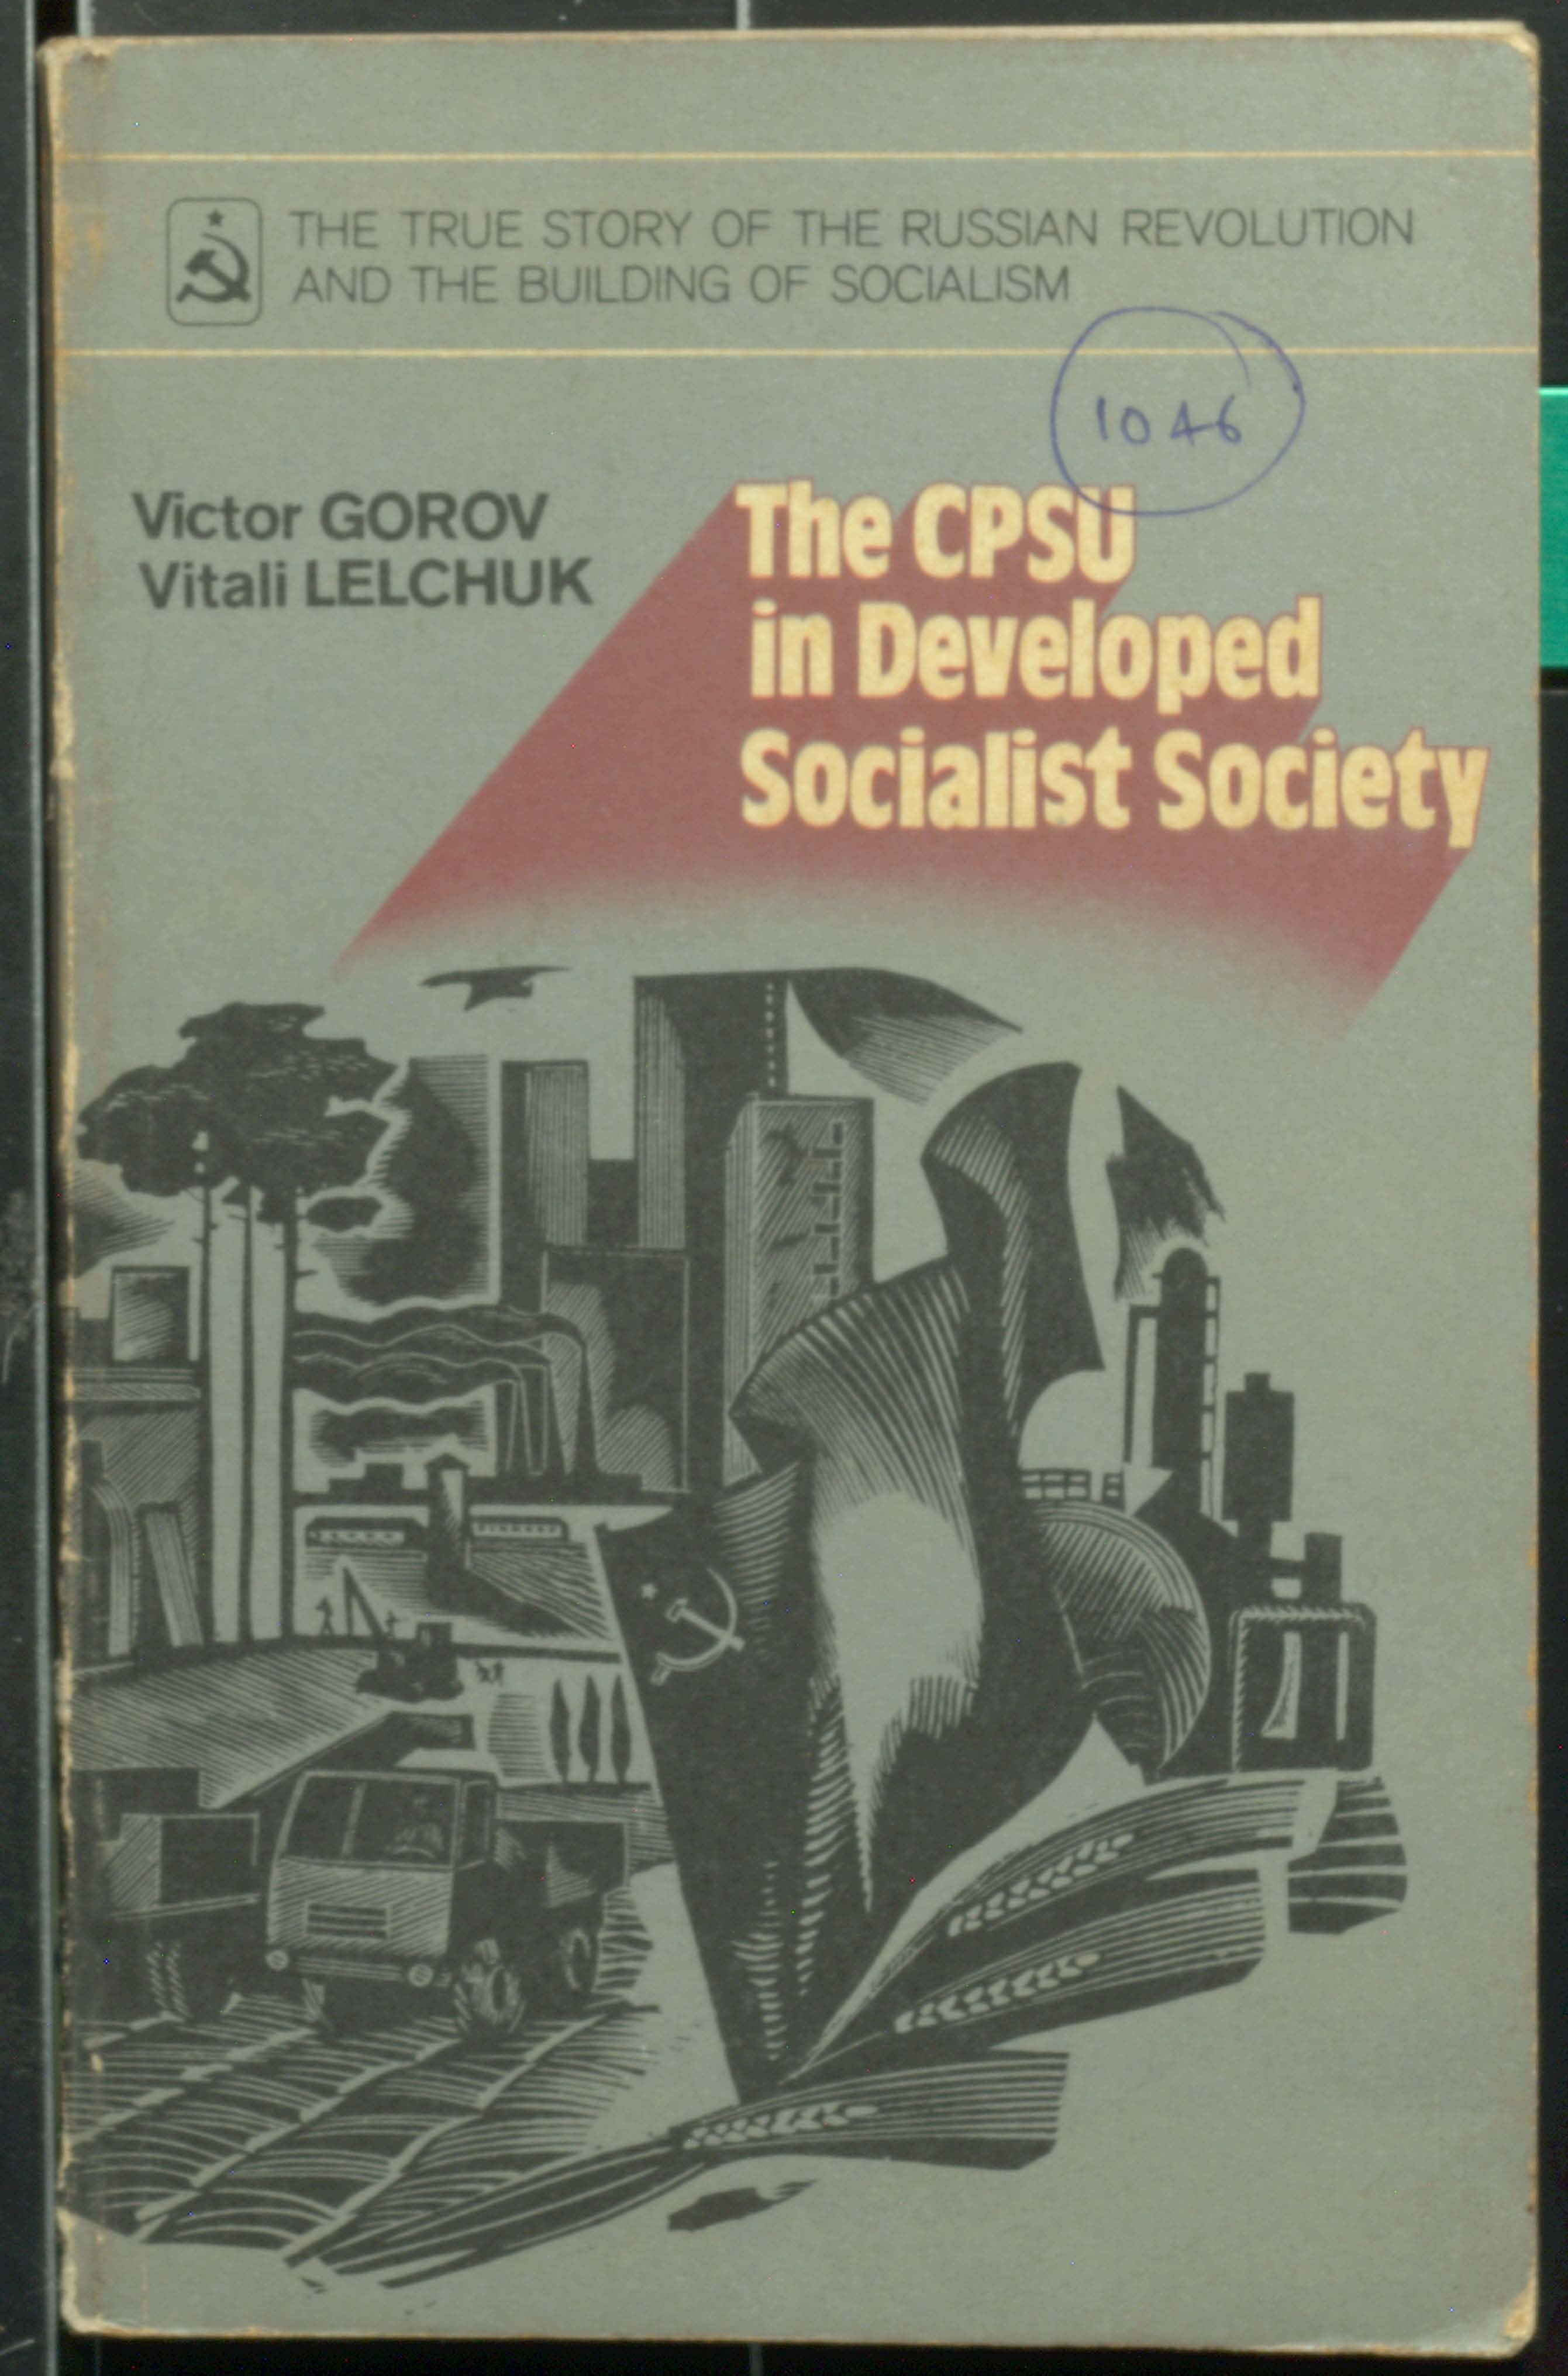 The CPSU in Developed Socialist Society